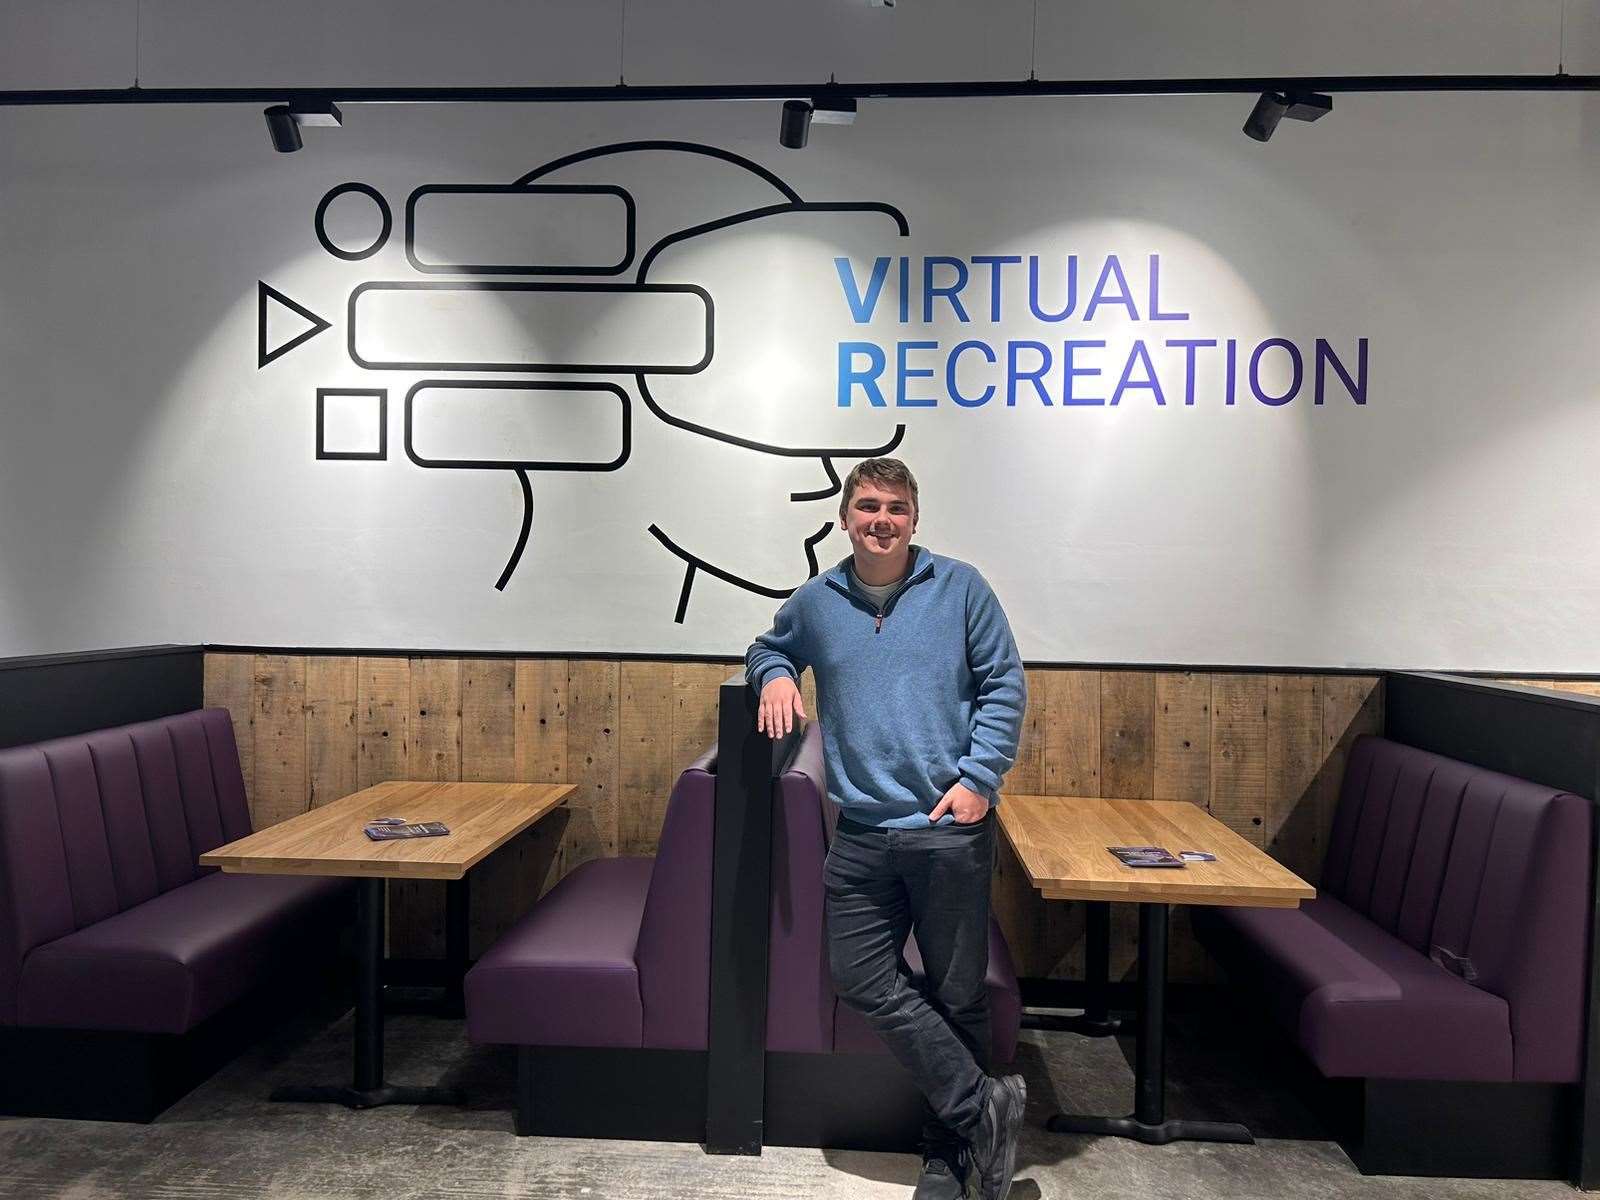 We tried Virtual Recreation in Elwick Place, Ashford